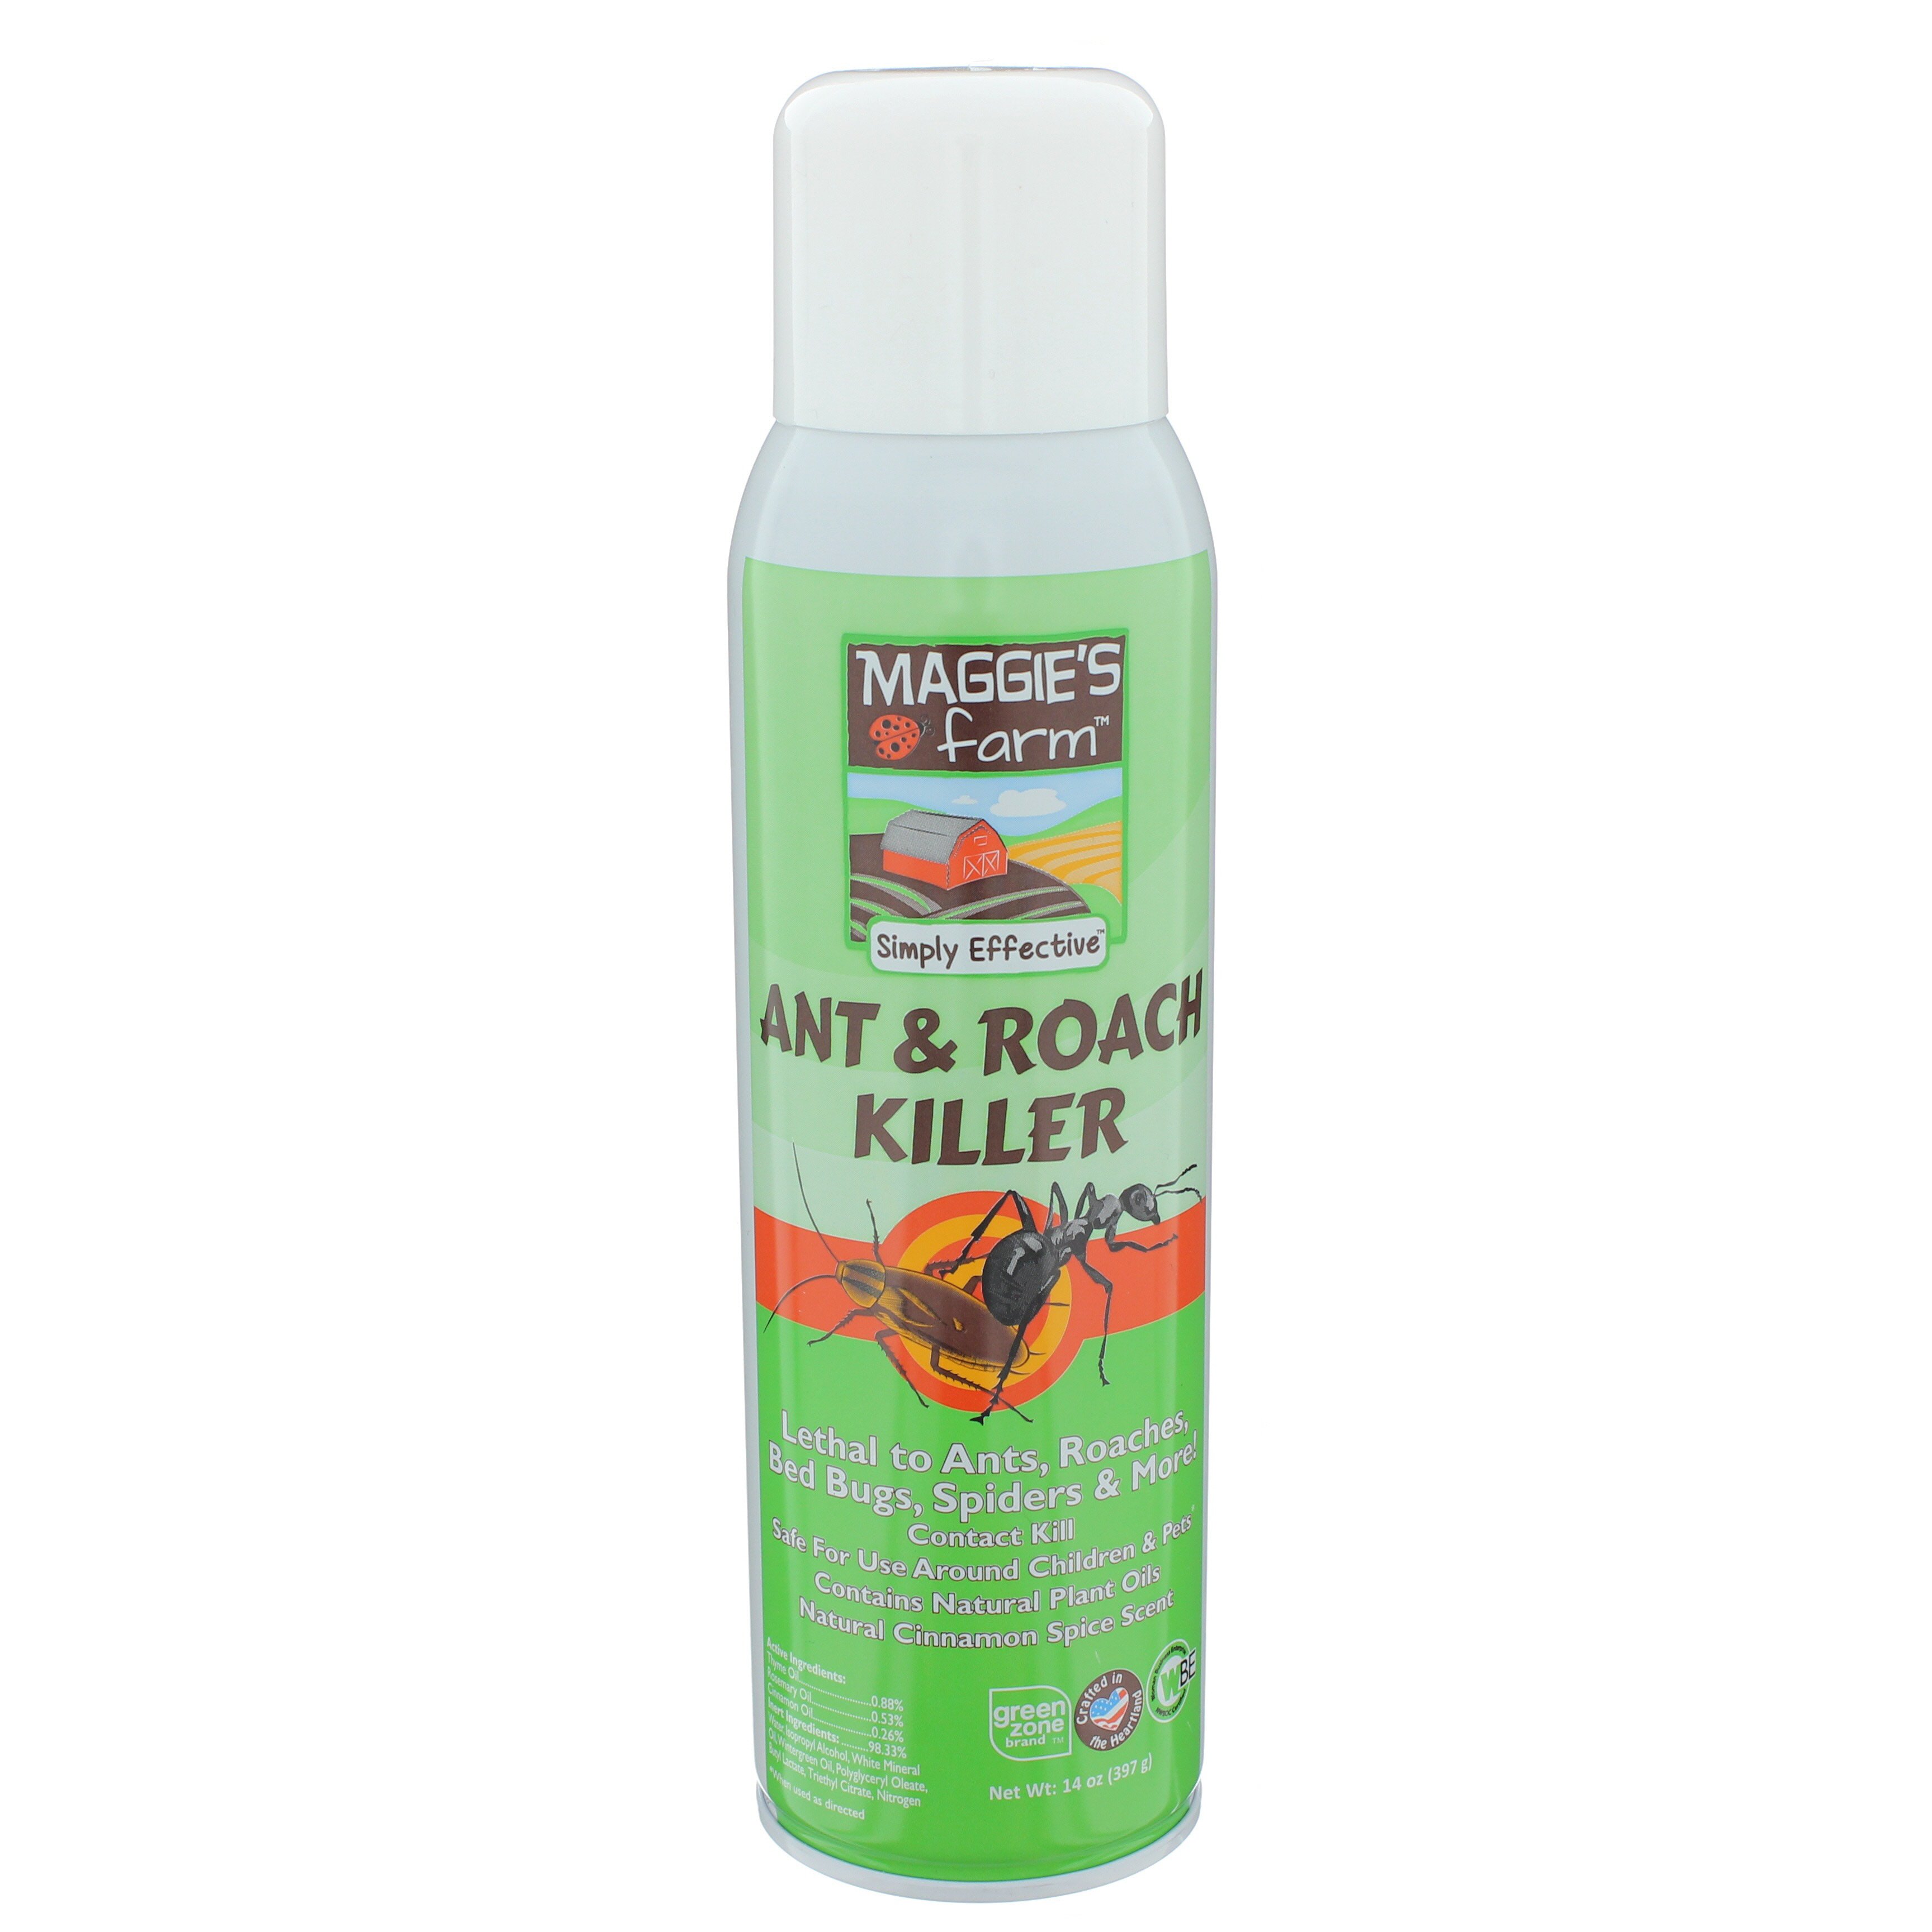 Hot Shot 15 oz. Flying Insect Killer Aerosol Spray Clean Fresh